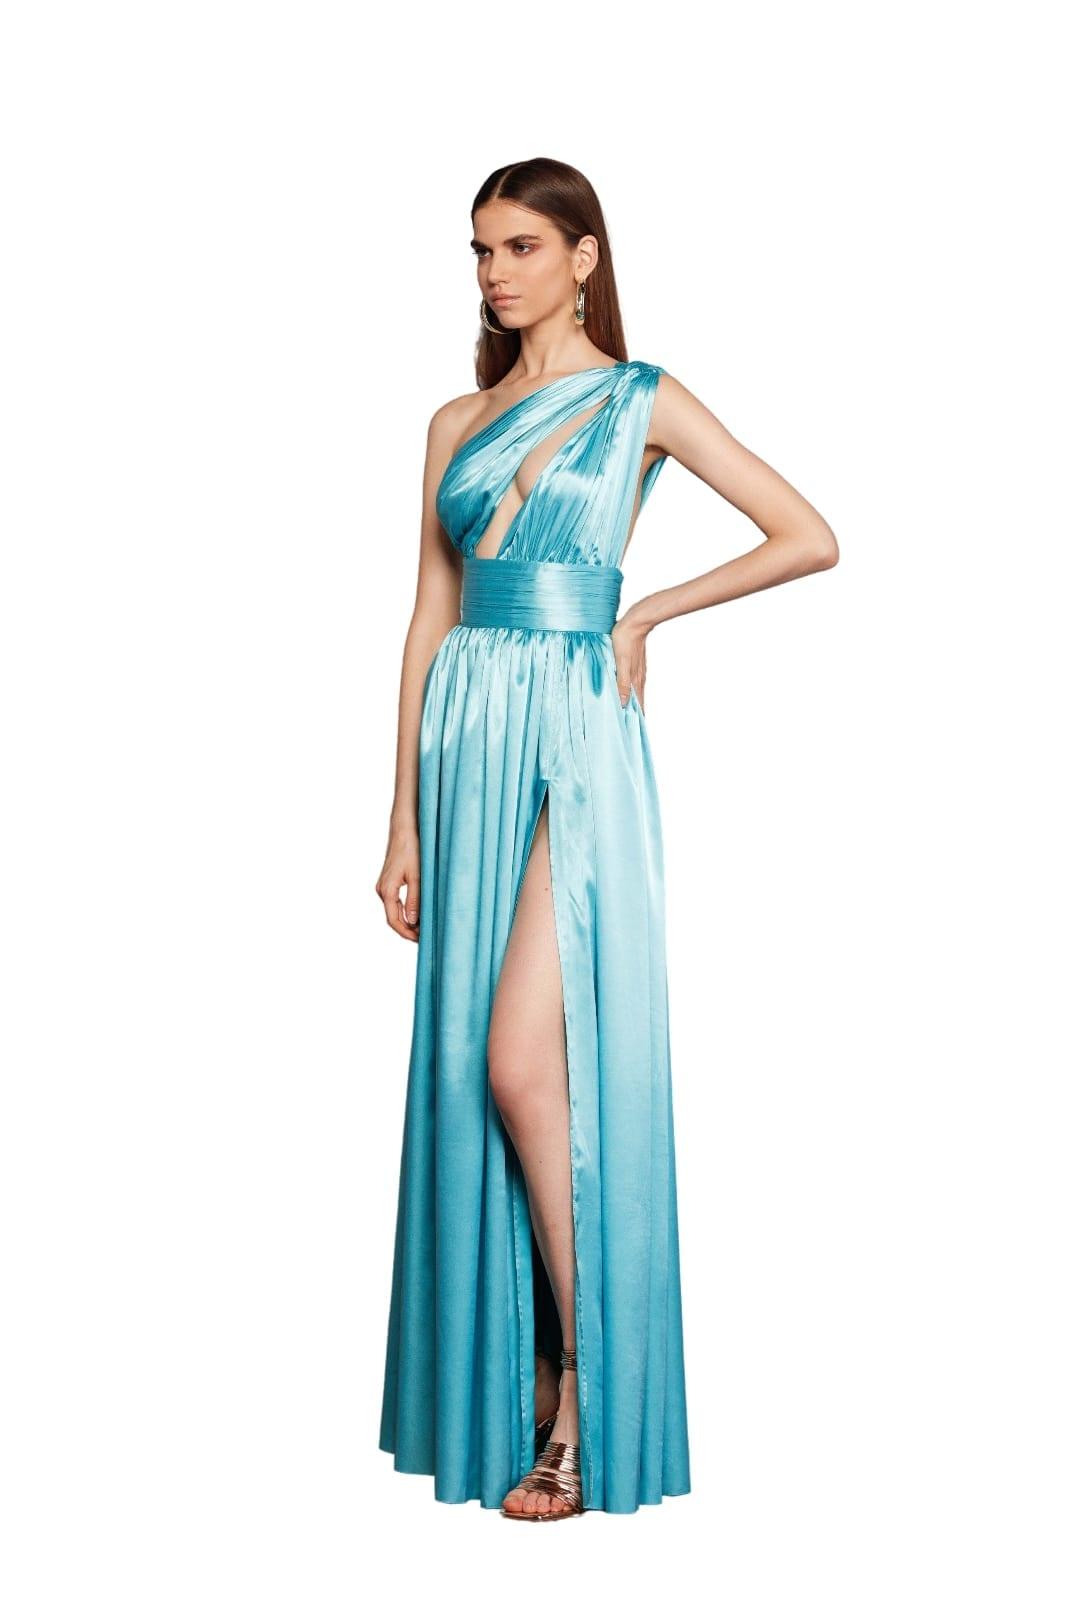 aphrodite-light-blue-gown-02